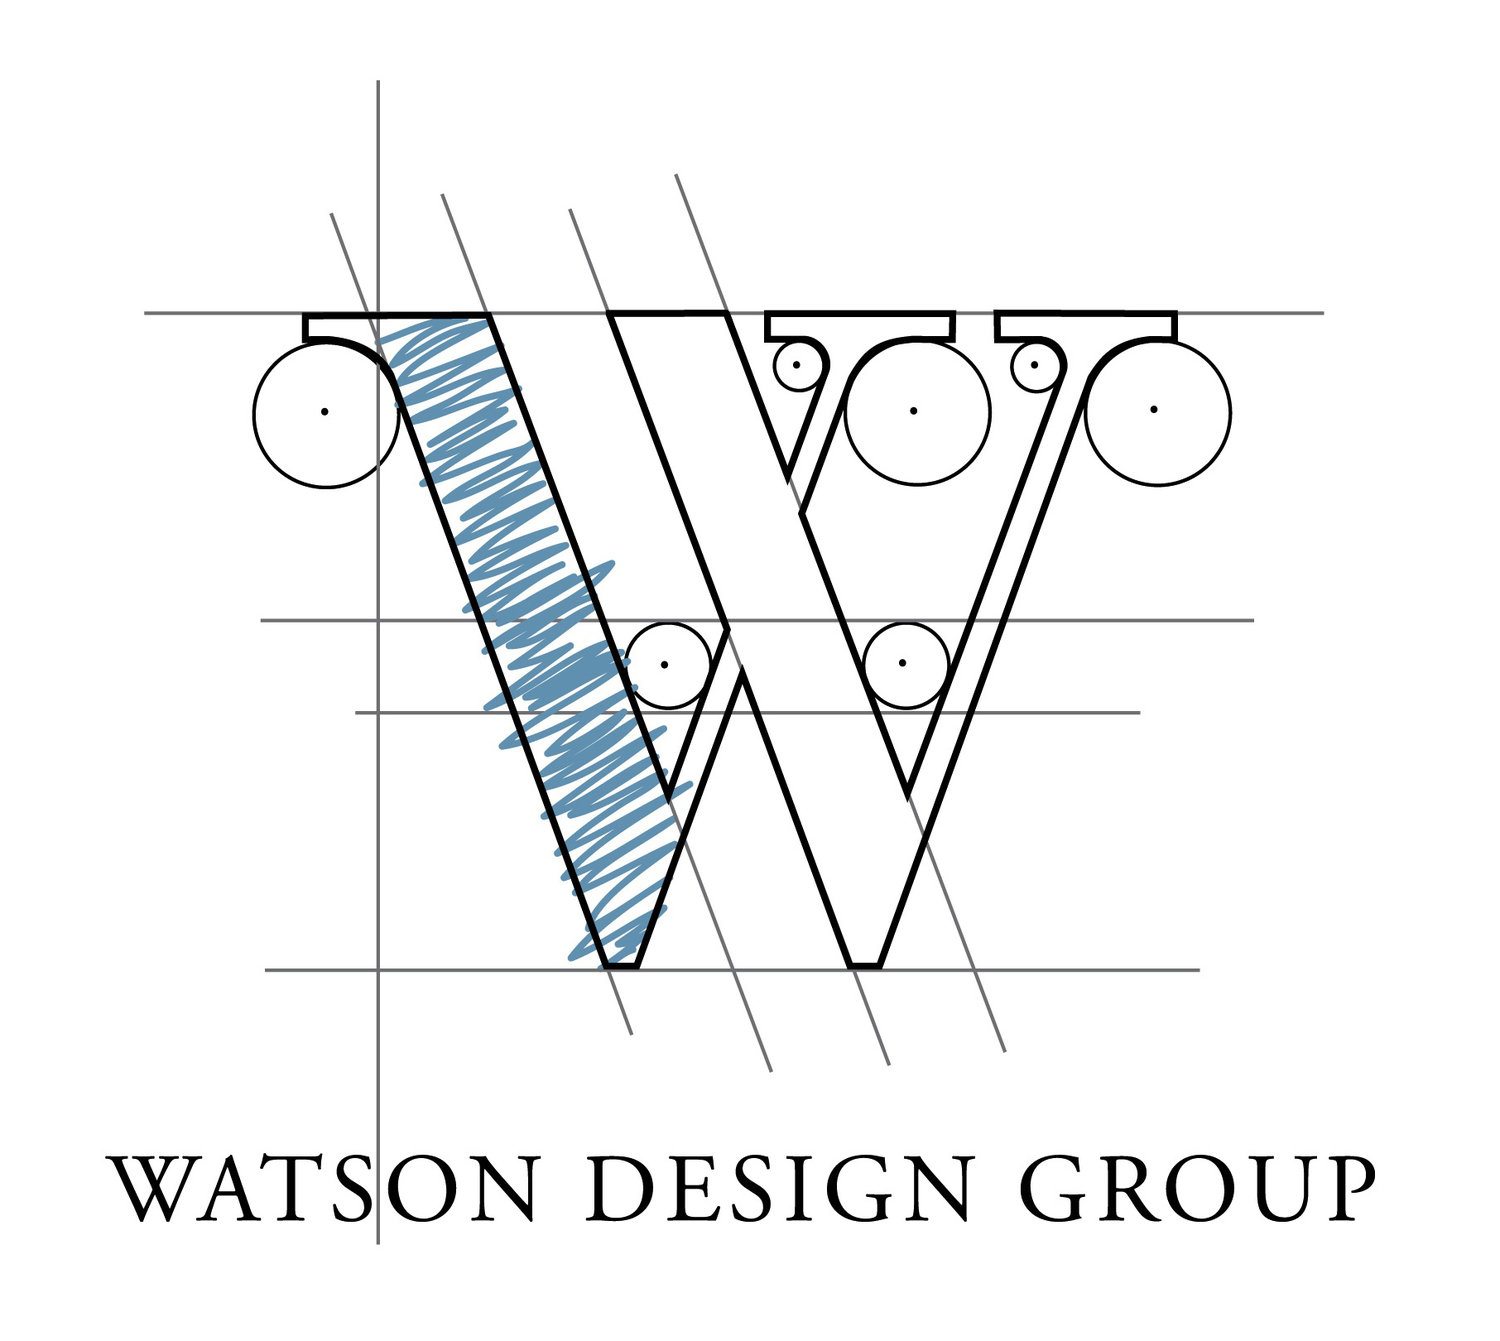 WatsonDesignGroup